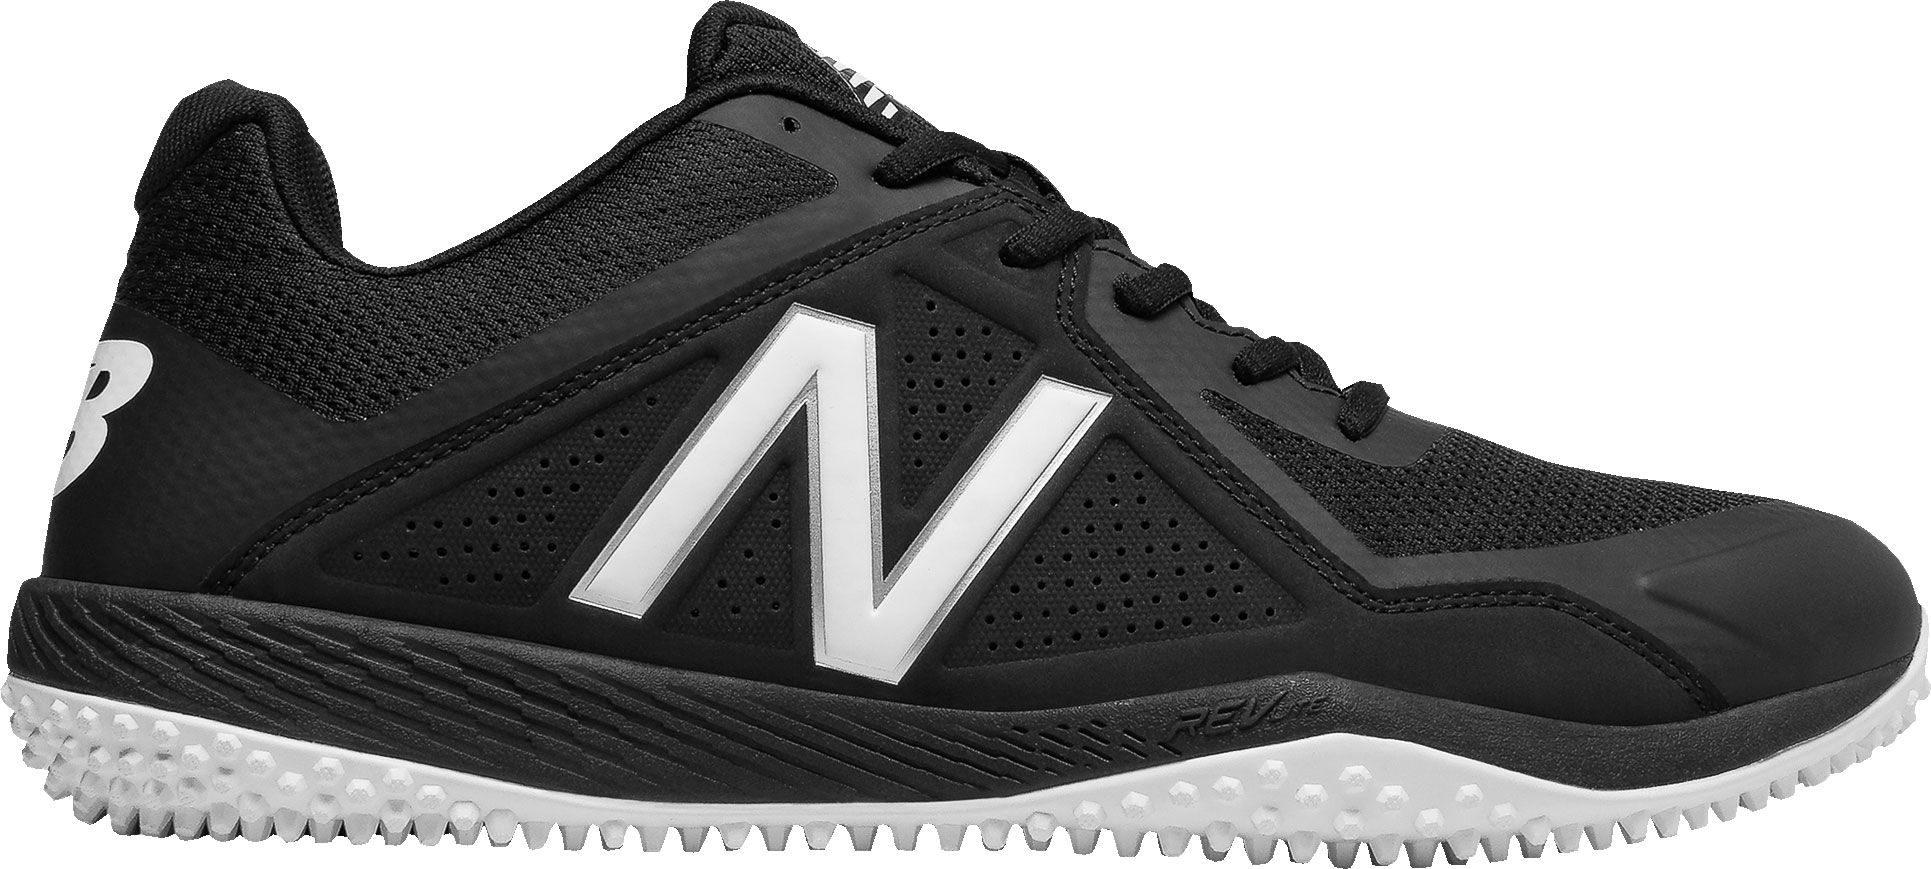 new balance indoor baseball shoes